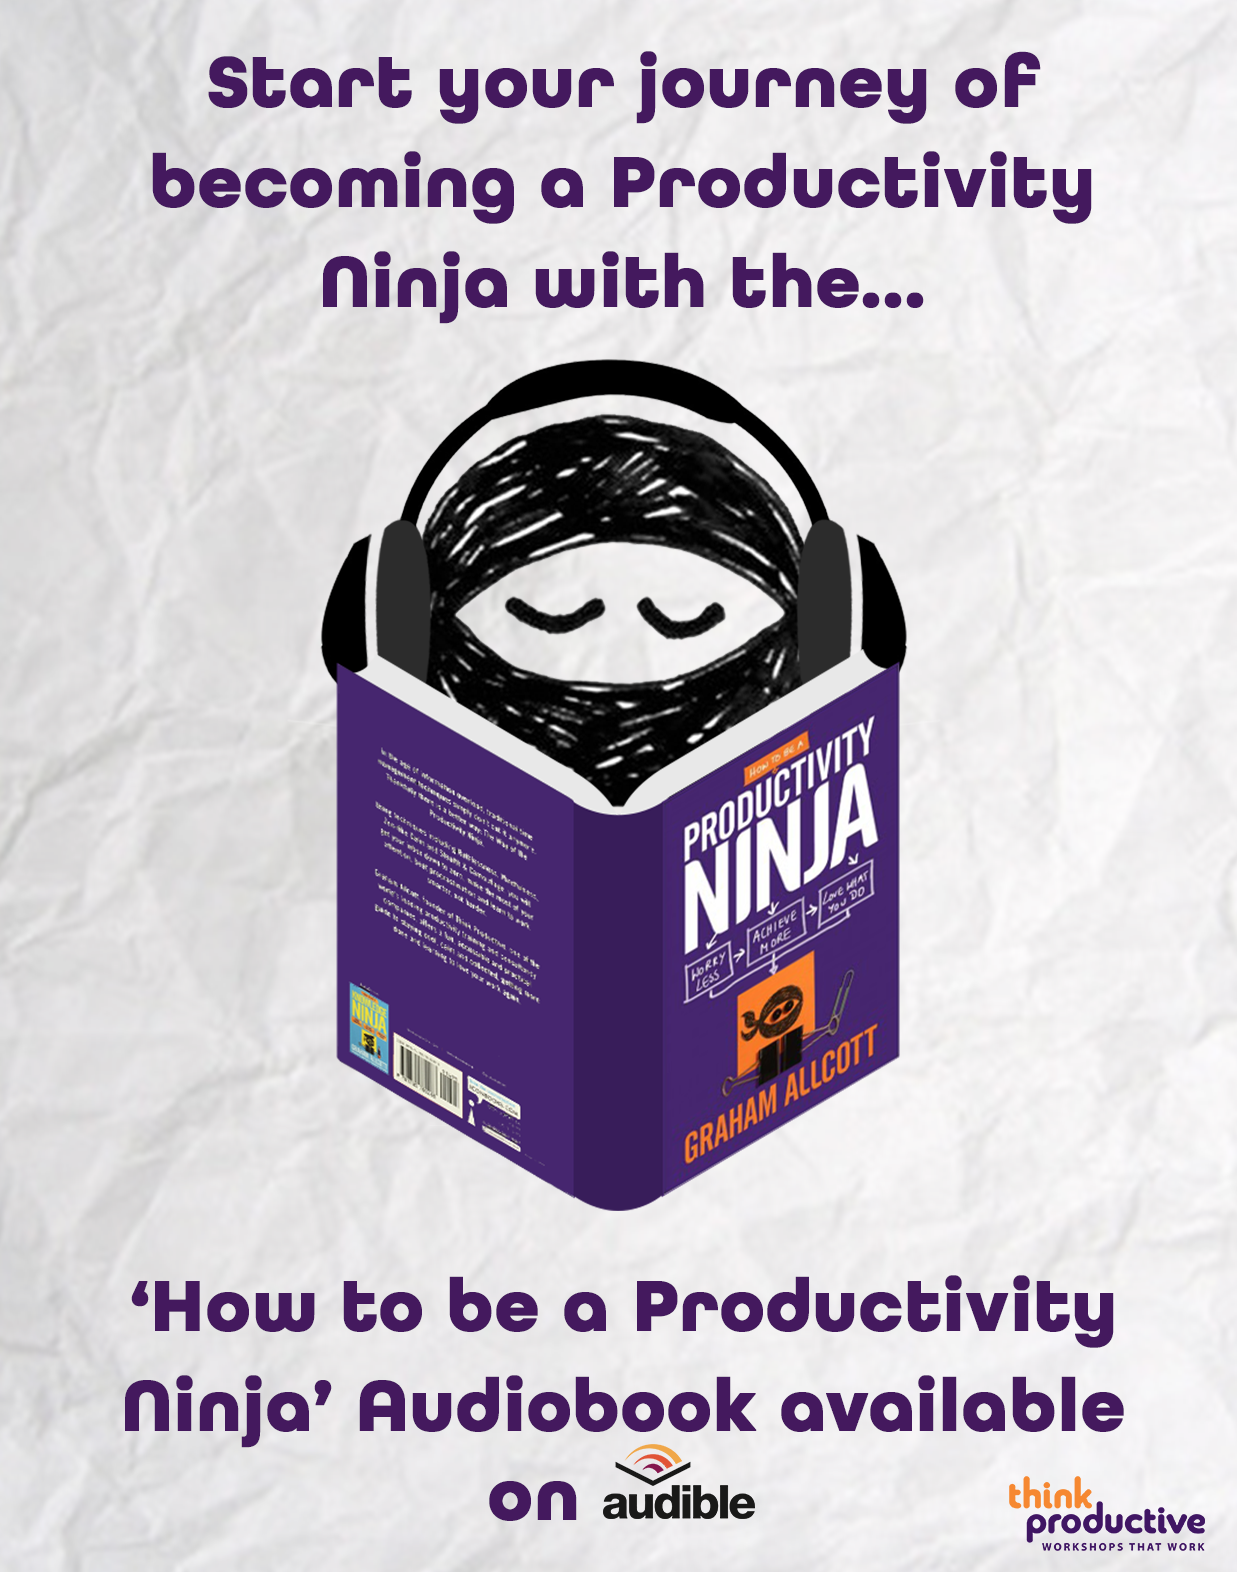 How to be a Productivity Ninja audiobook